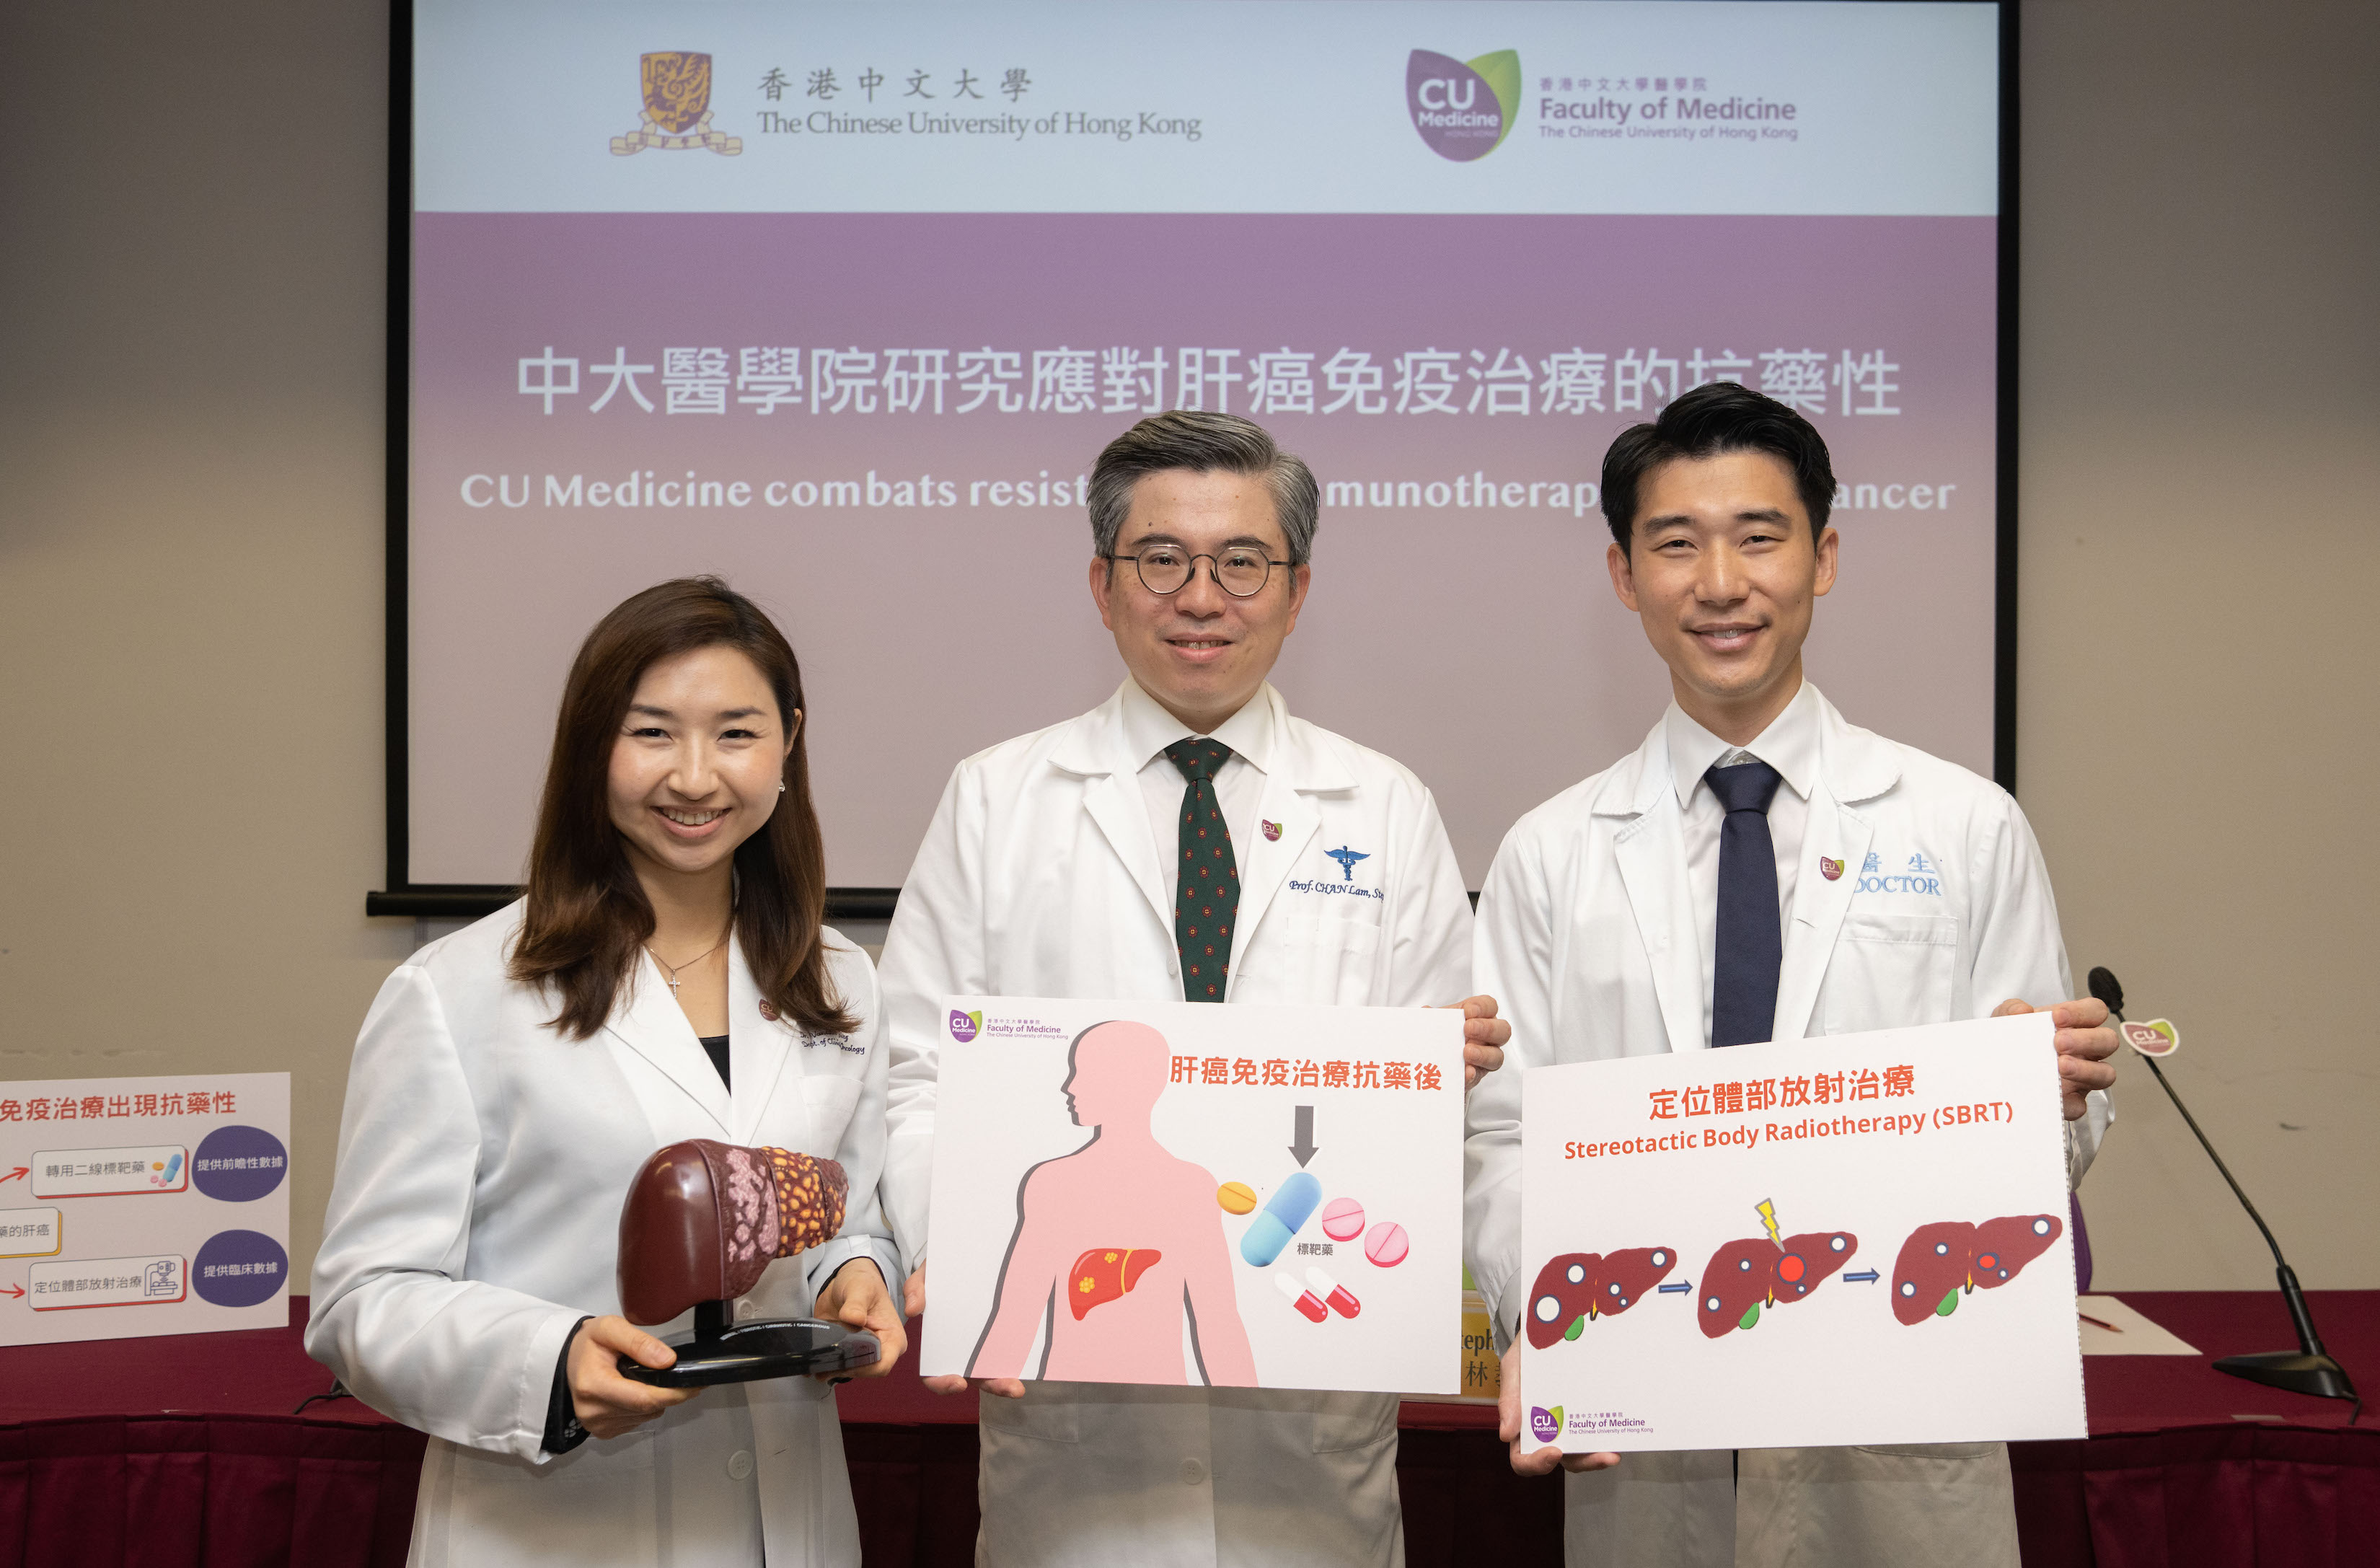 Dr Vanessa Yeung, Professor Stephen Chan and Dr Landon Chan